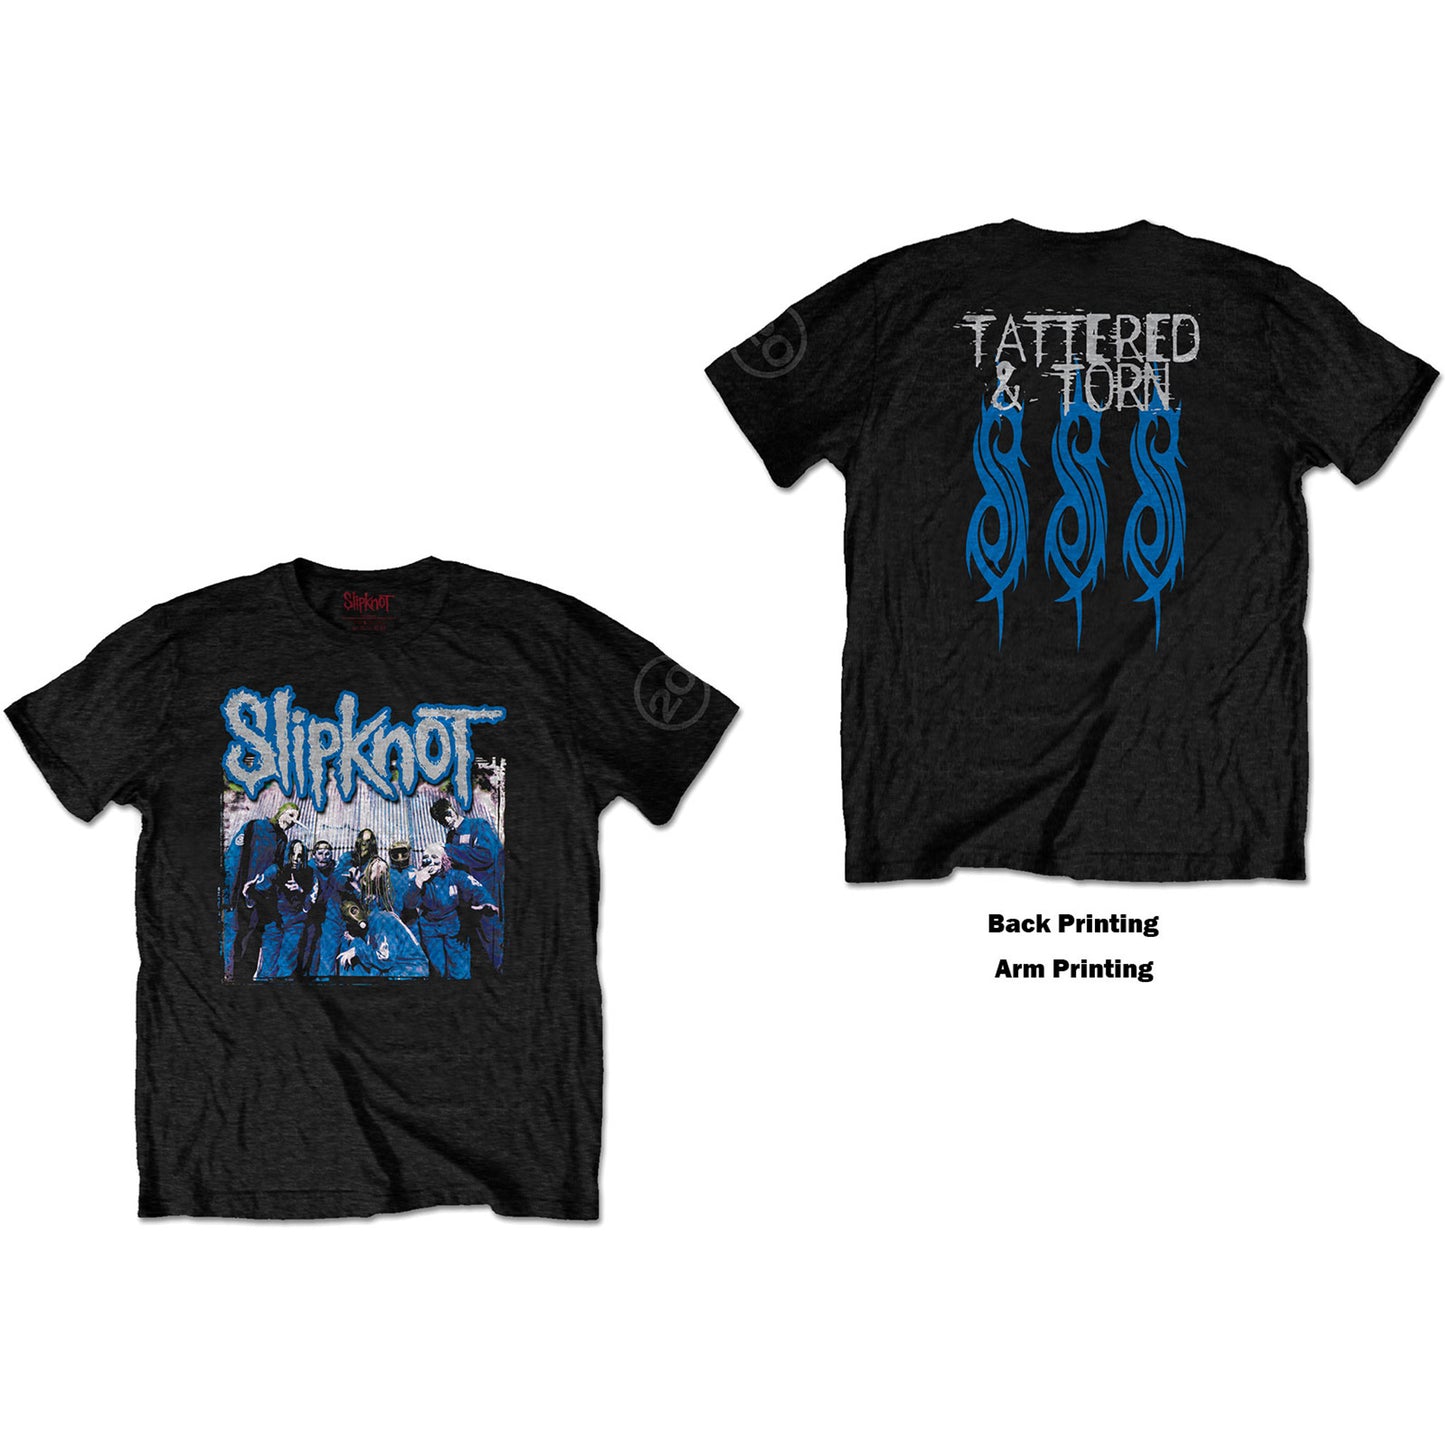 Slipknot 20th Anniversary T-Shirt